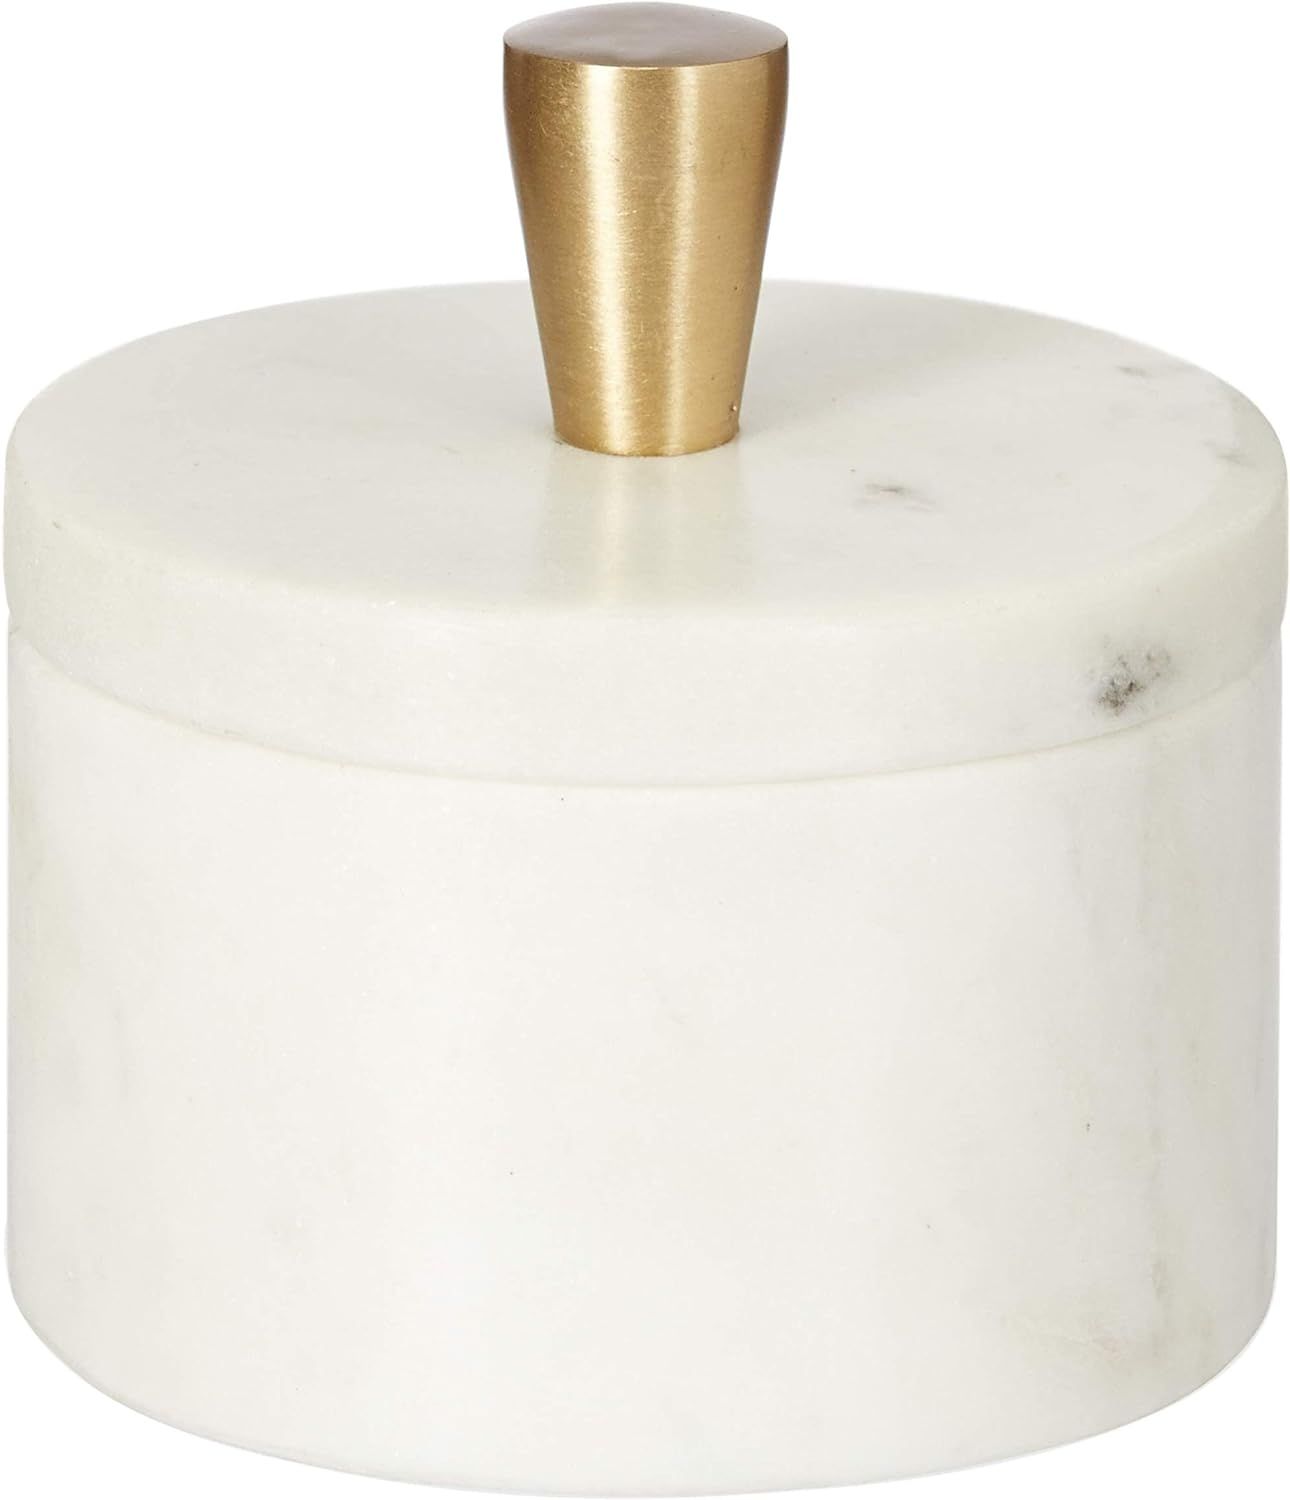 Queenza White Marble Salt Cellar with Lid and Brass Knob, 3 Inch Salt Box | Amazon (US)